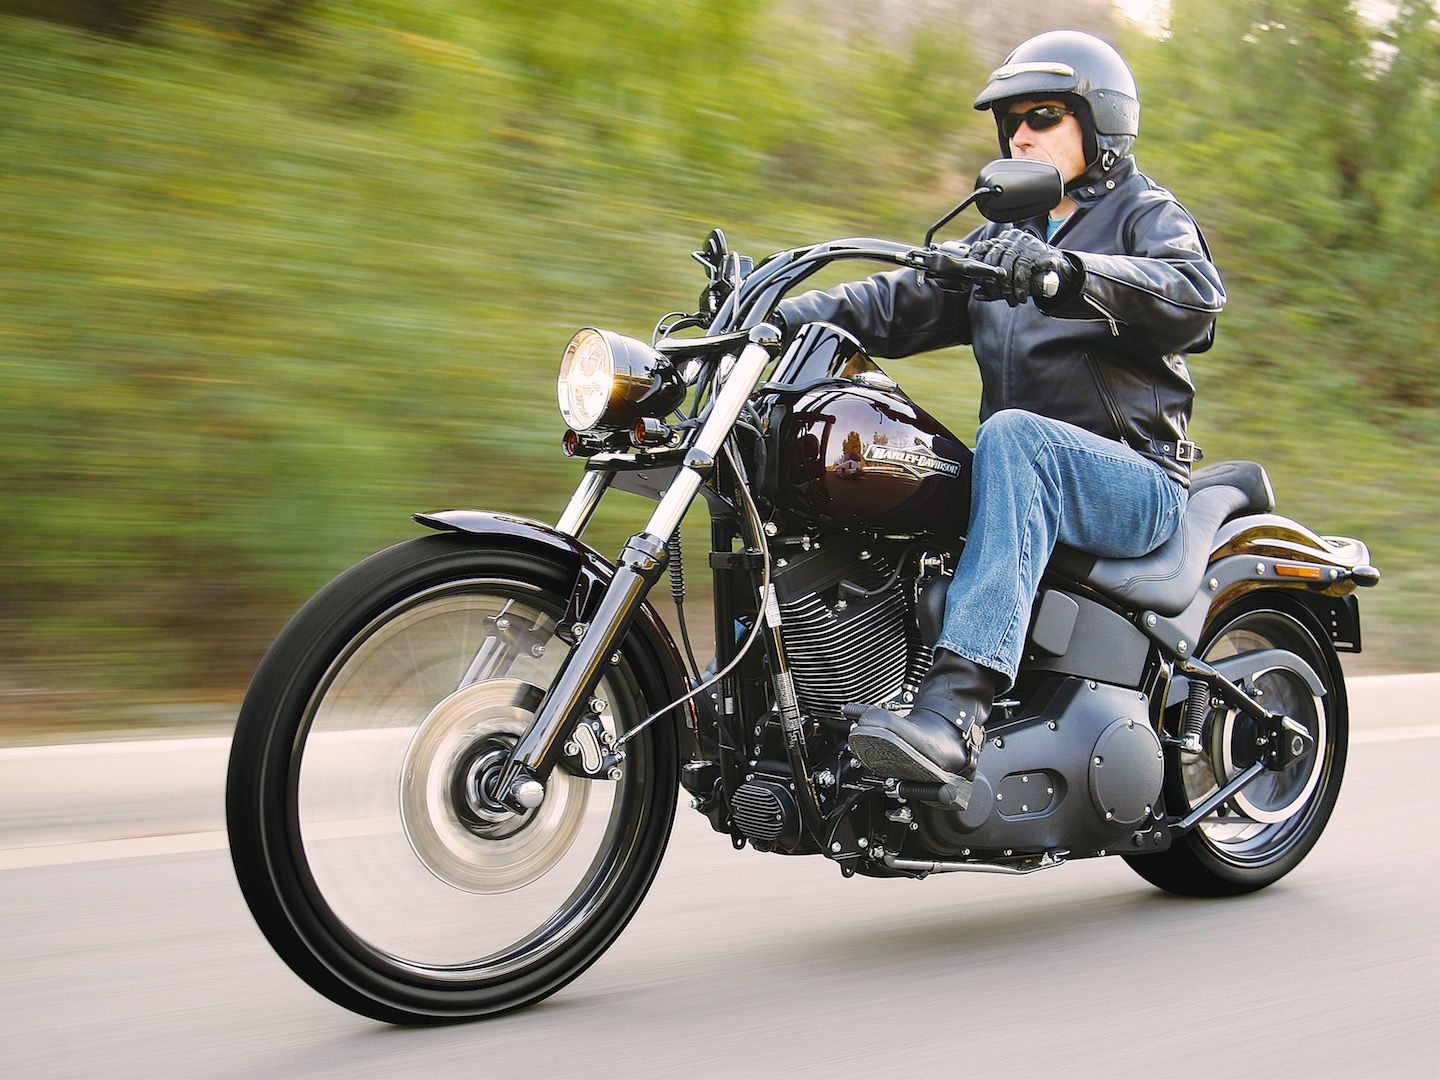 2006 Harley-Davidson Night Train Retro Review | Mad Dog Custom Cycles